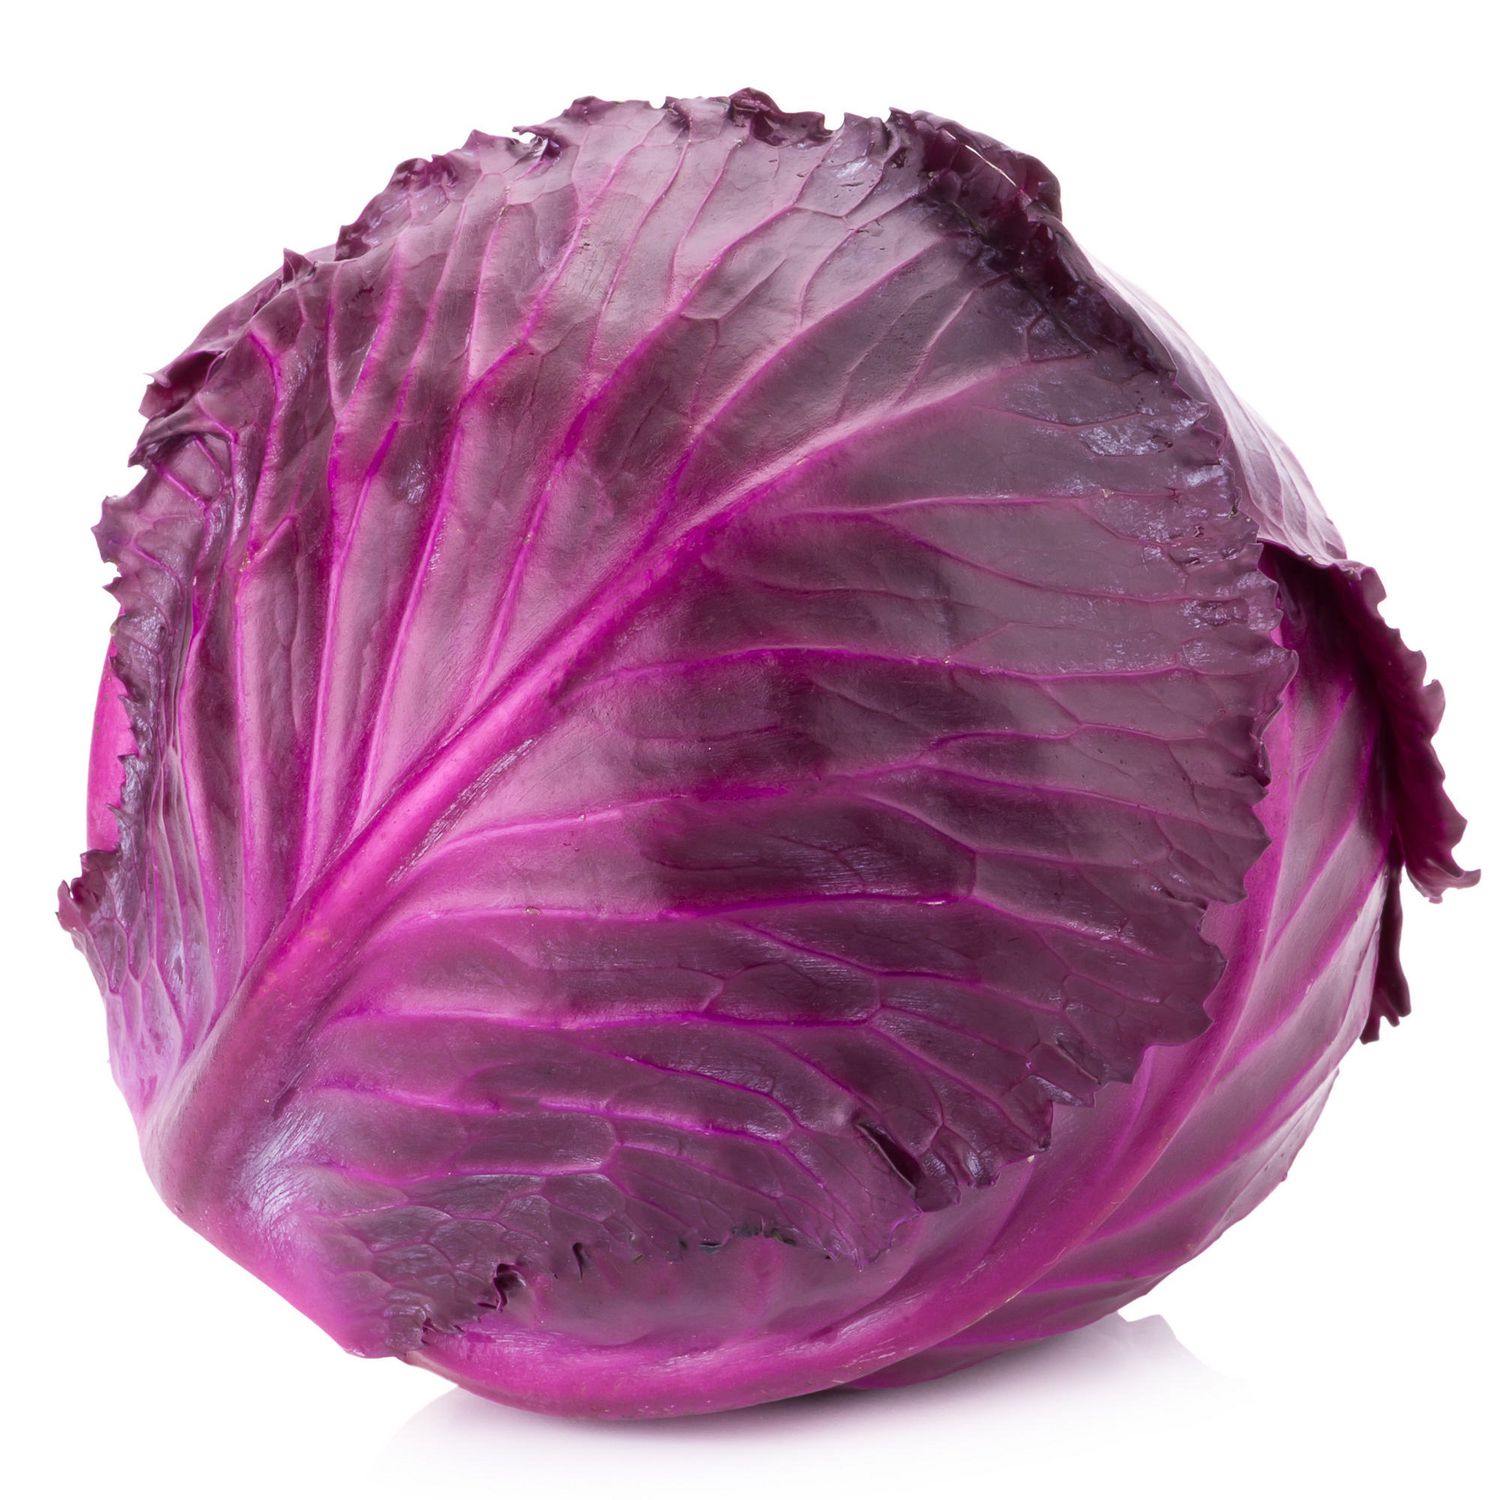 Cabbage, Red | Walmart Canada